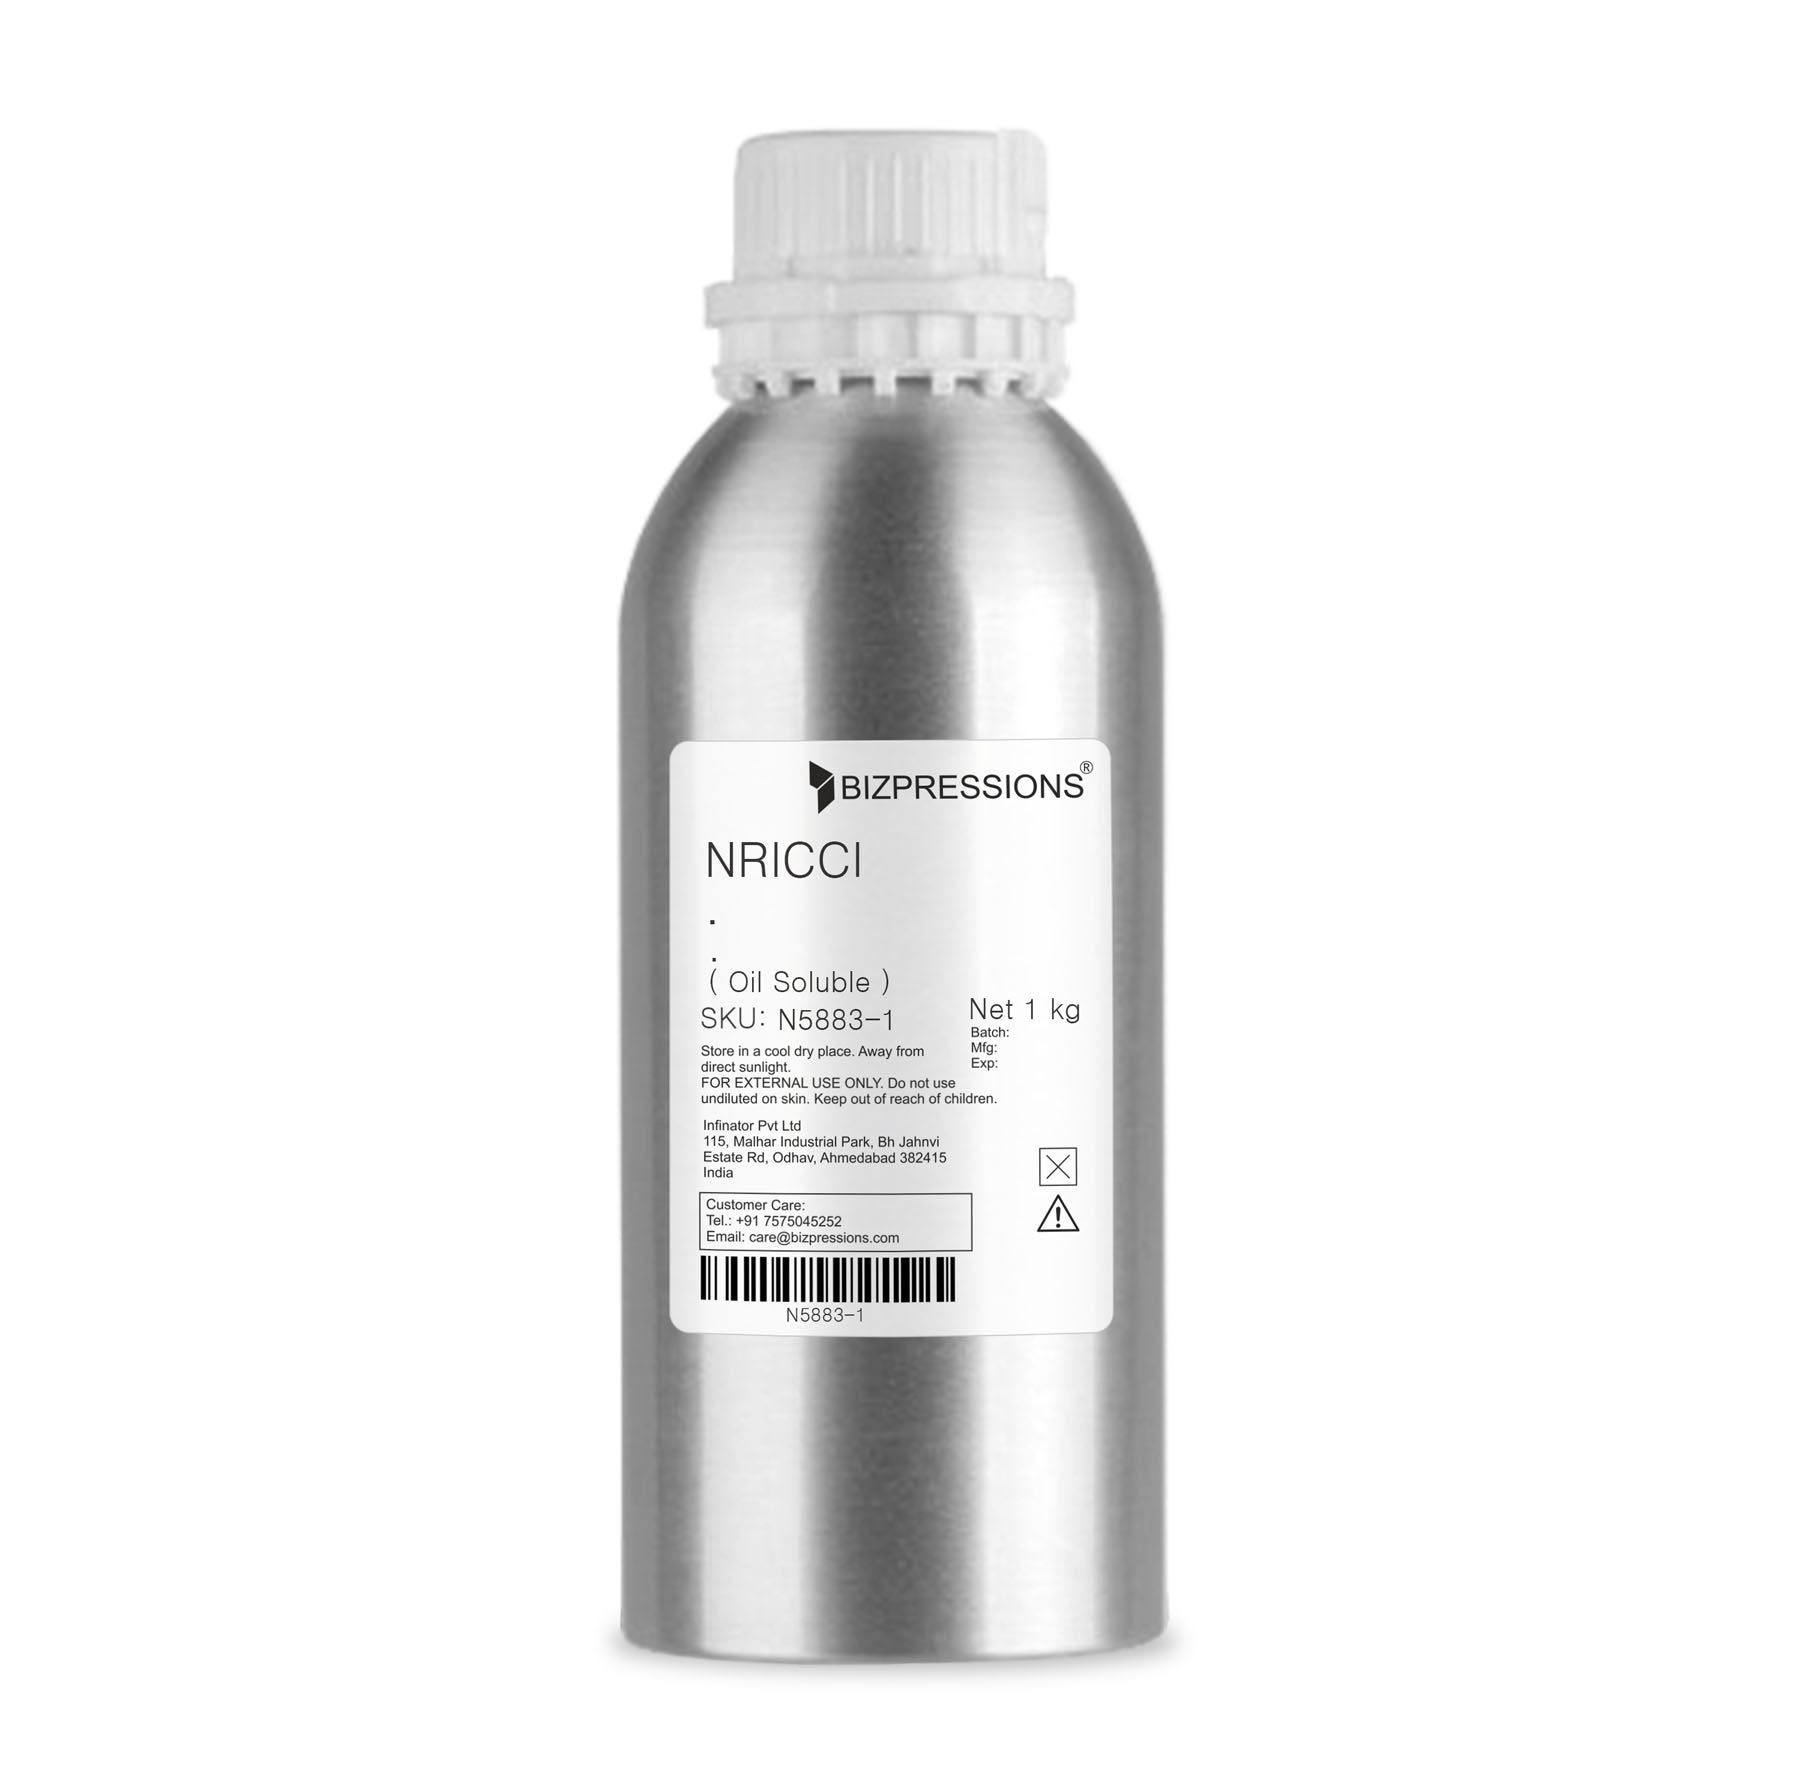 NRICCI - Fragrance ( Oil Soluble ) - 1 kg